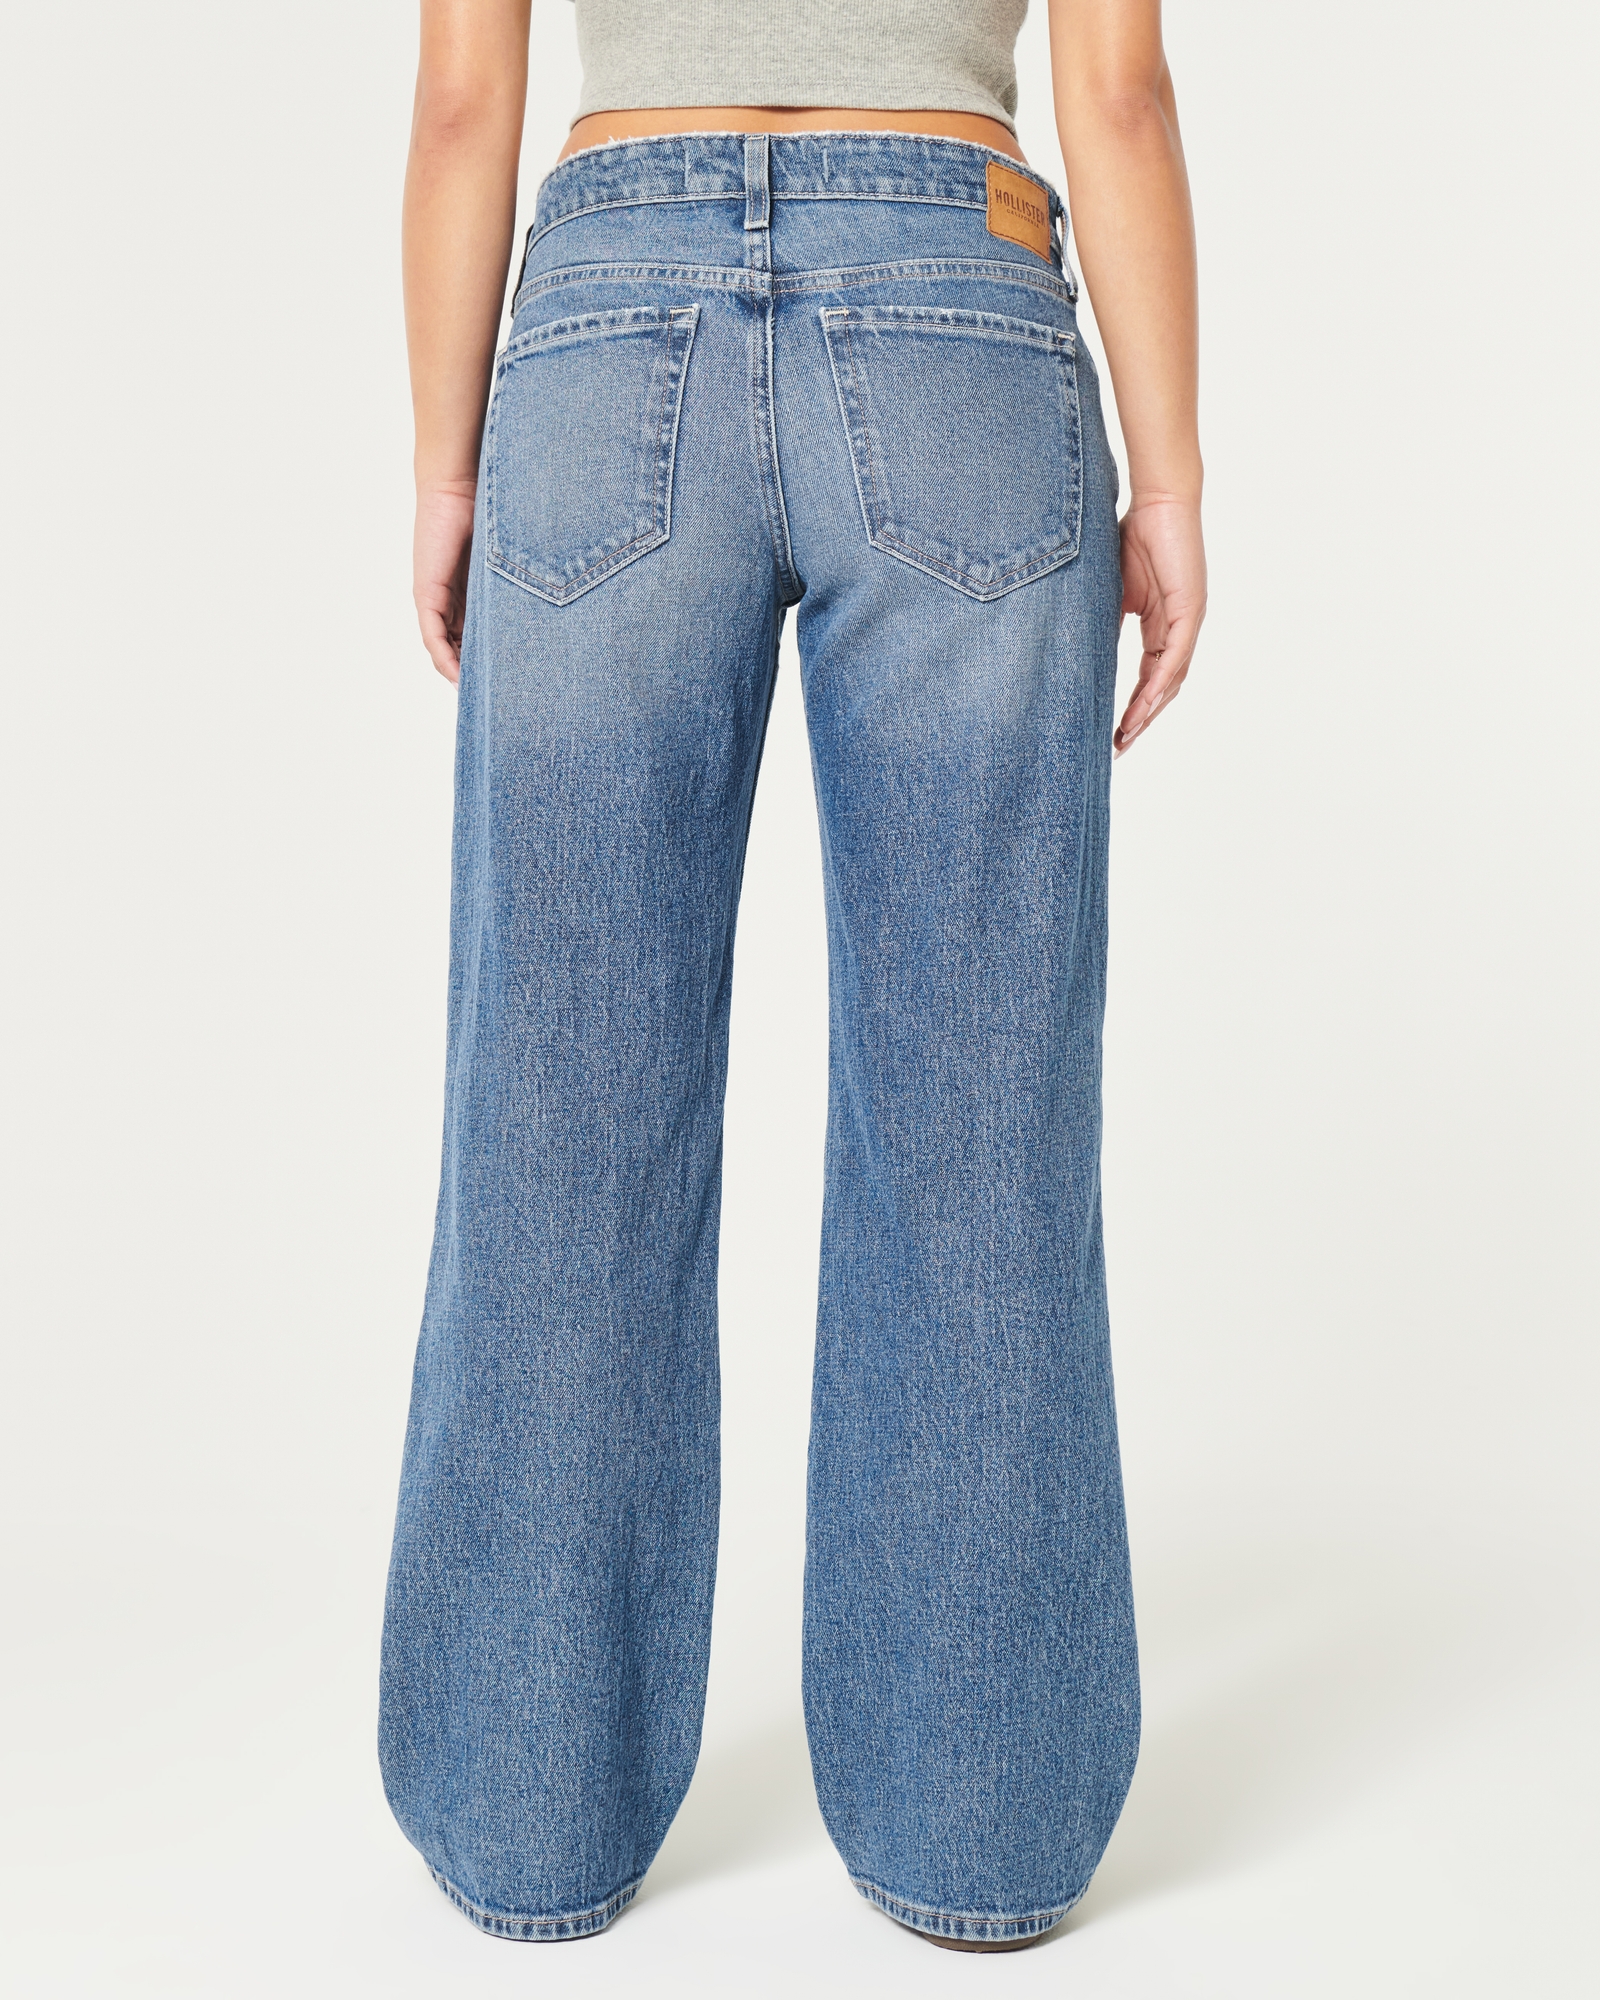 Hollister low rise vintage baggy jeans